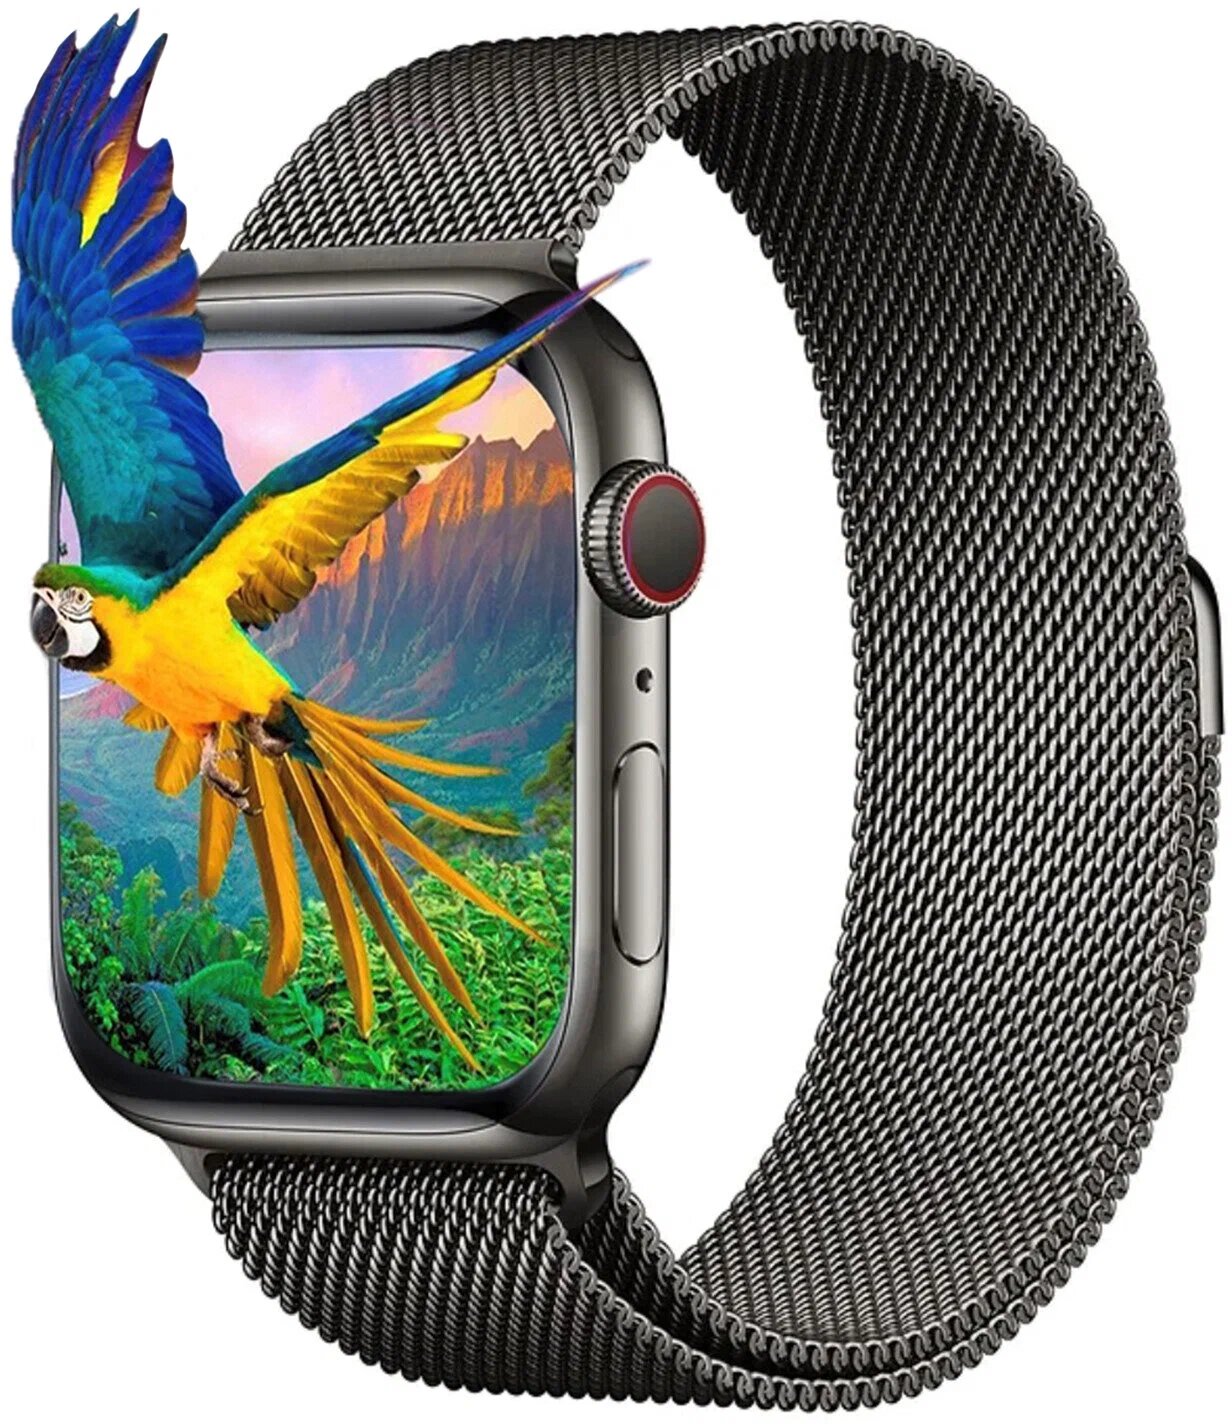 Cмарт часы GS8 MAX PREMIUM Series Smart Watch iPS Display, iOS, Android, 2 ремешка, Bluetooth звонки, Уведомления, Черные